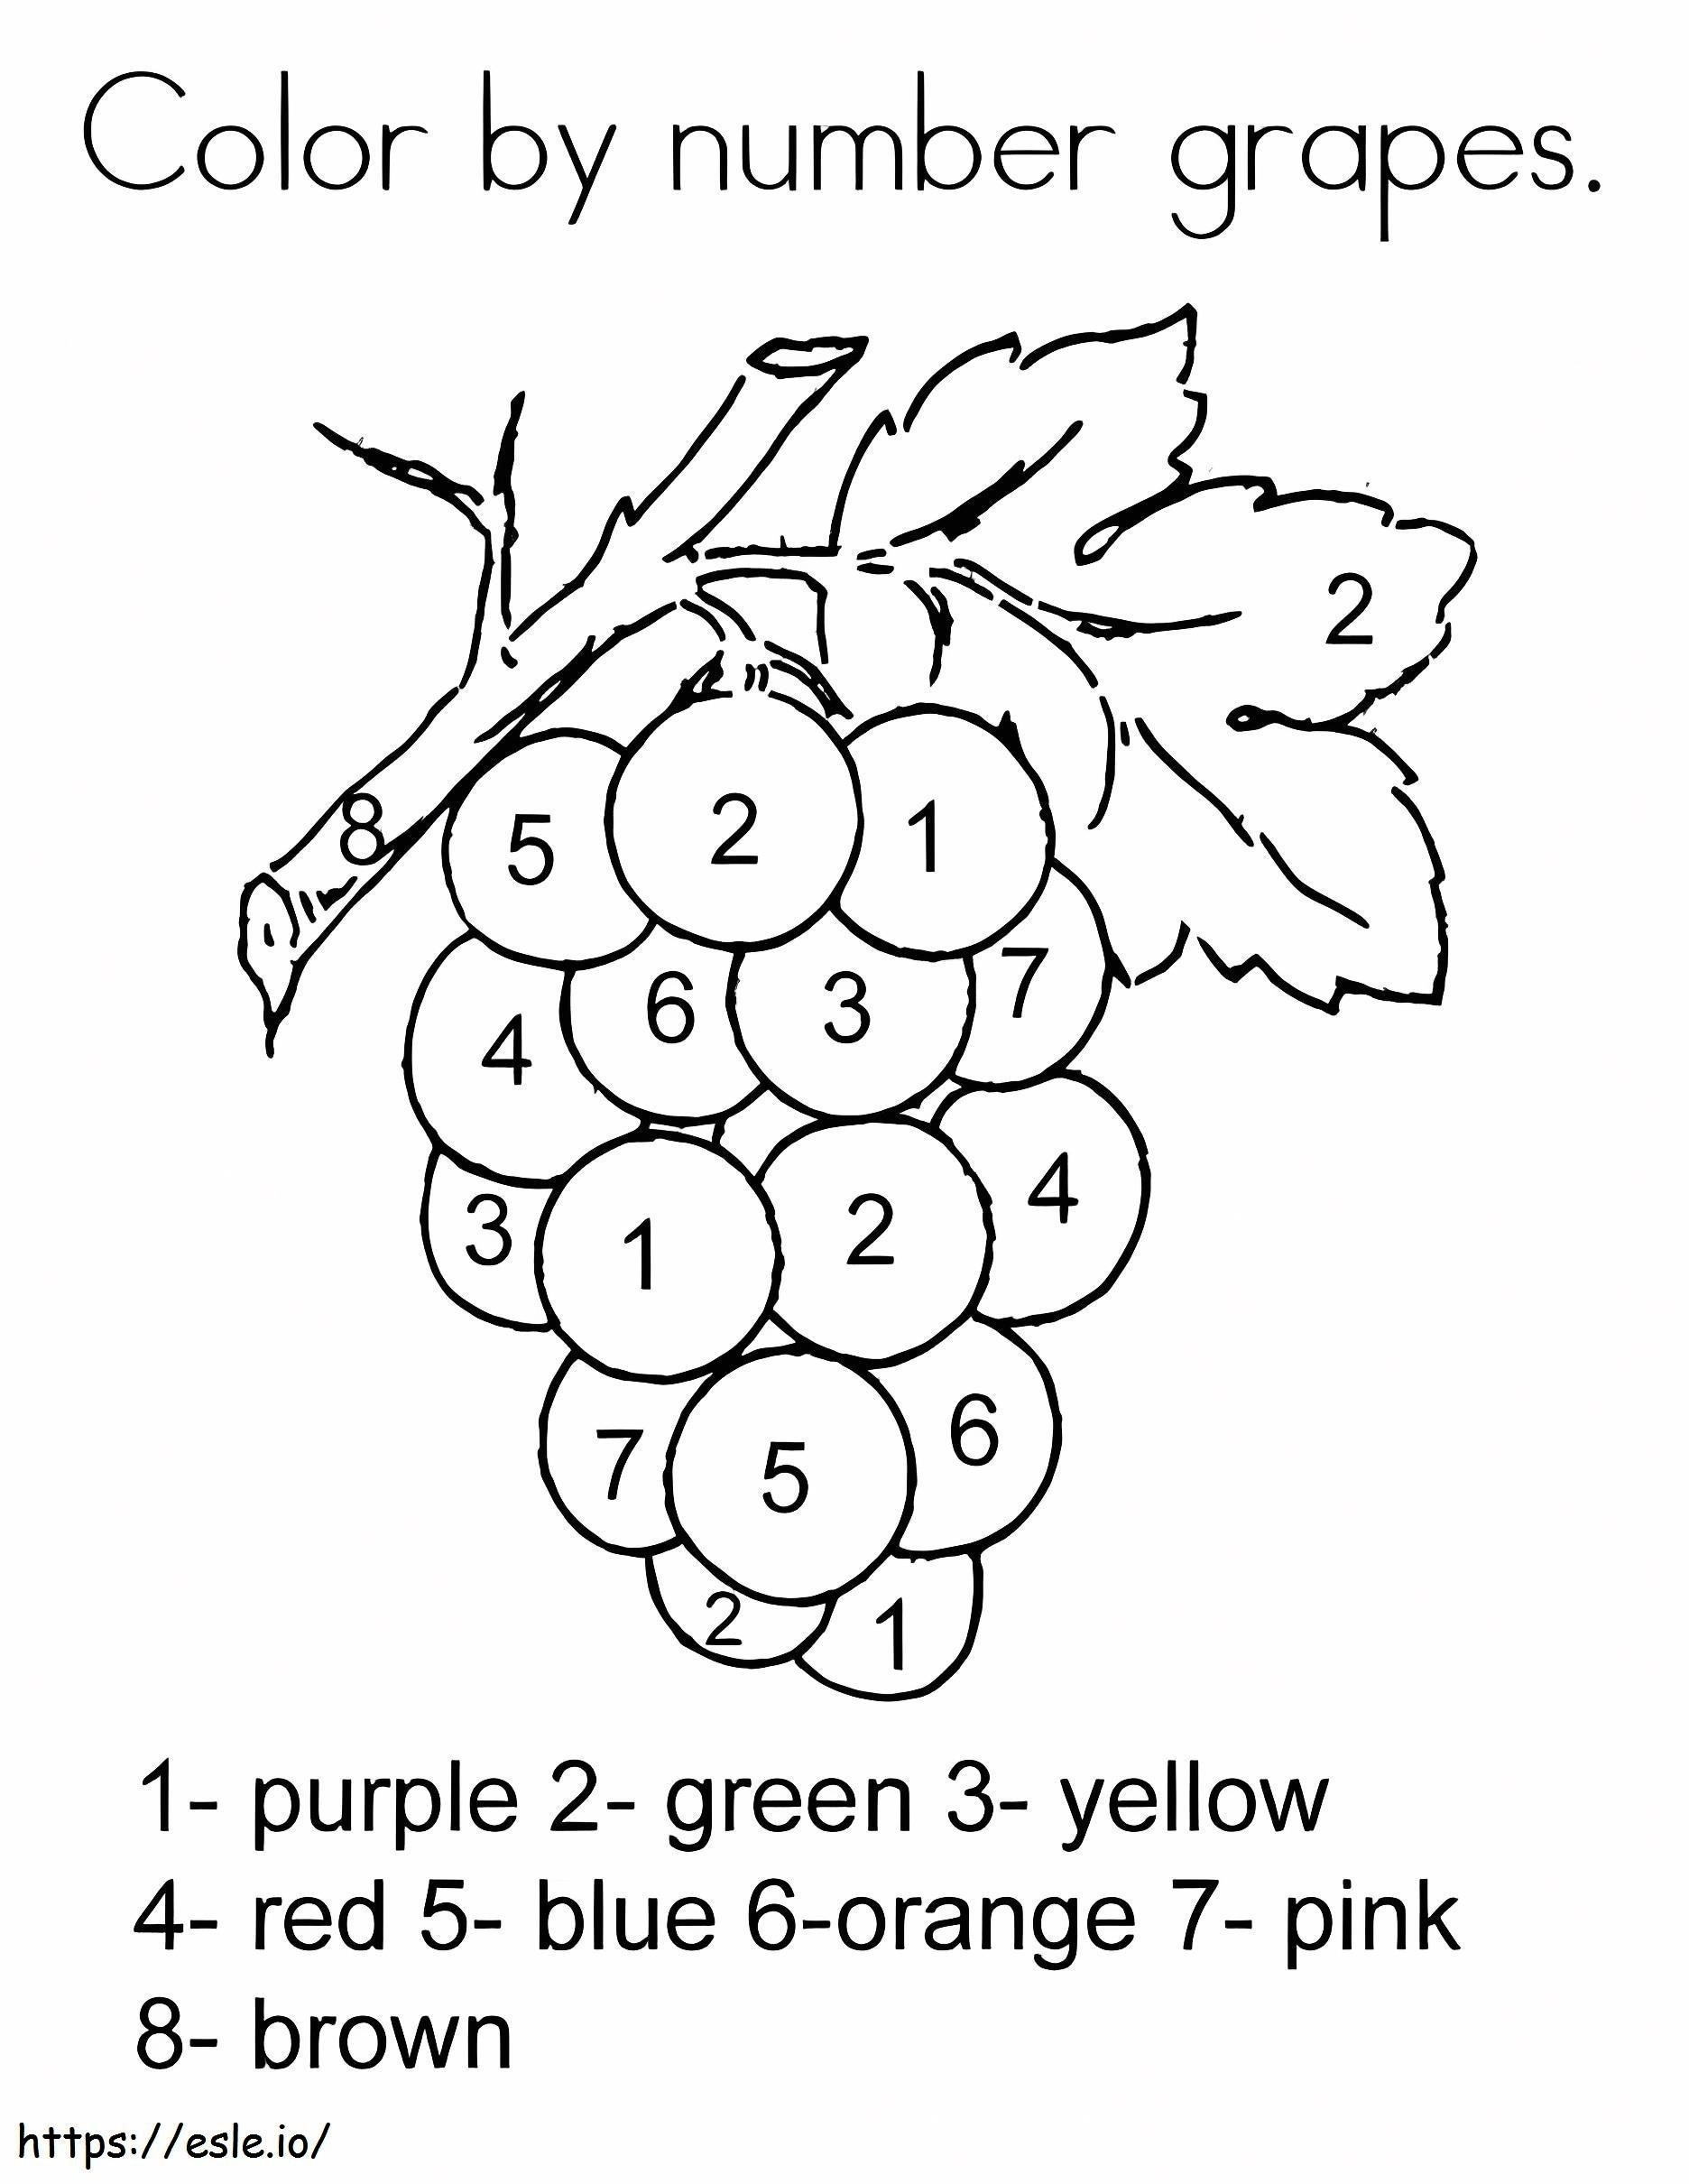 Cor de uvas por número para colorir